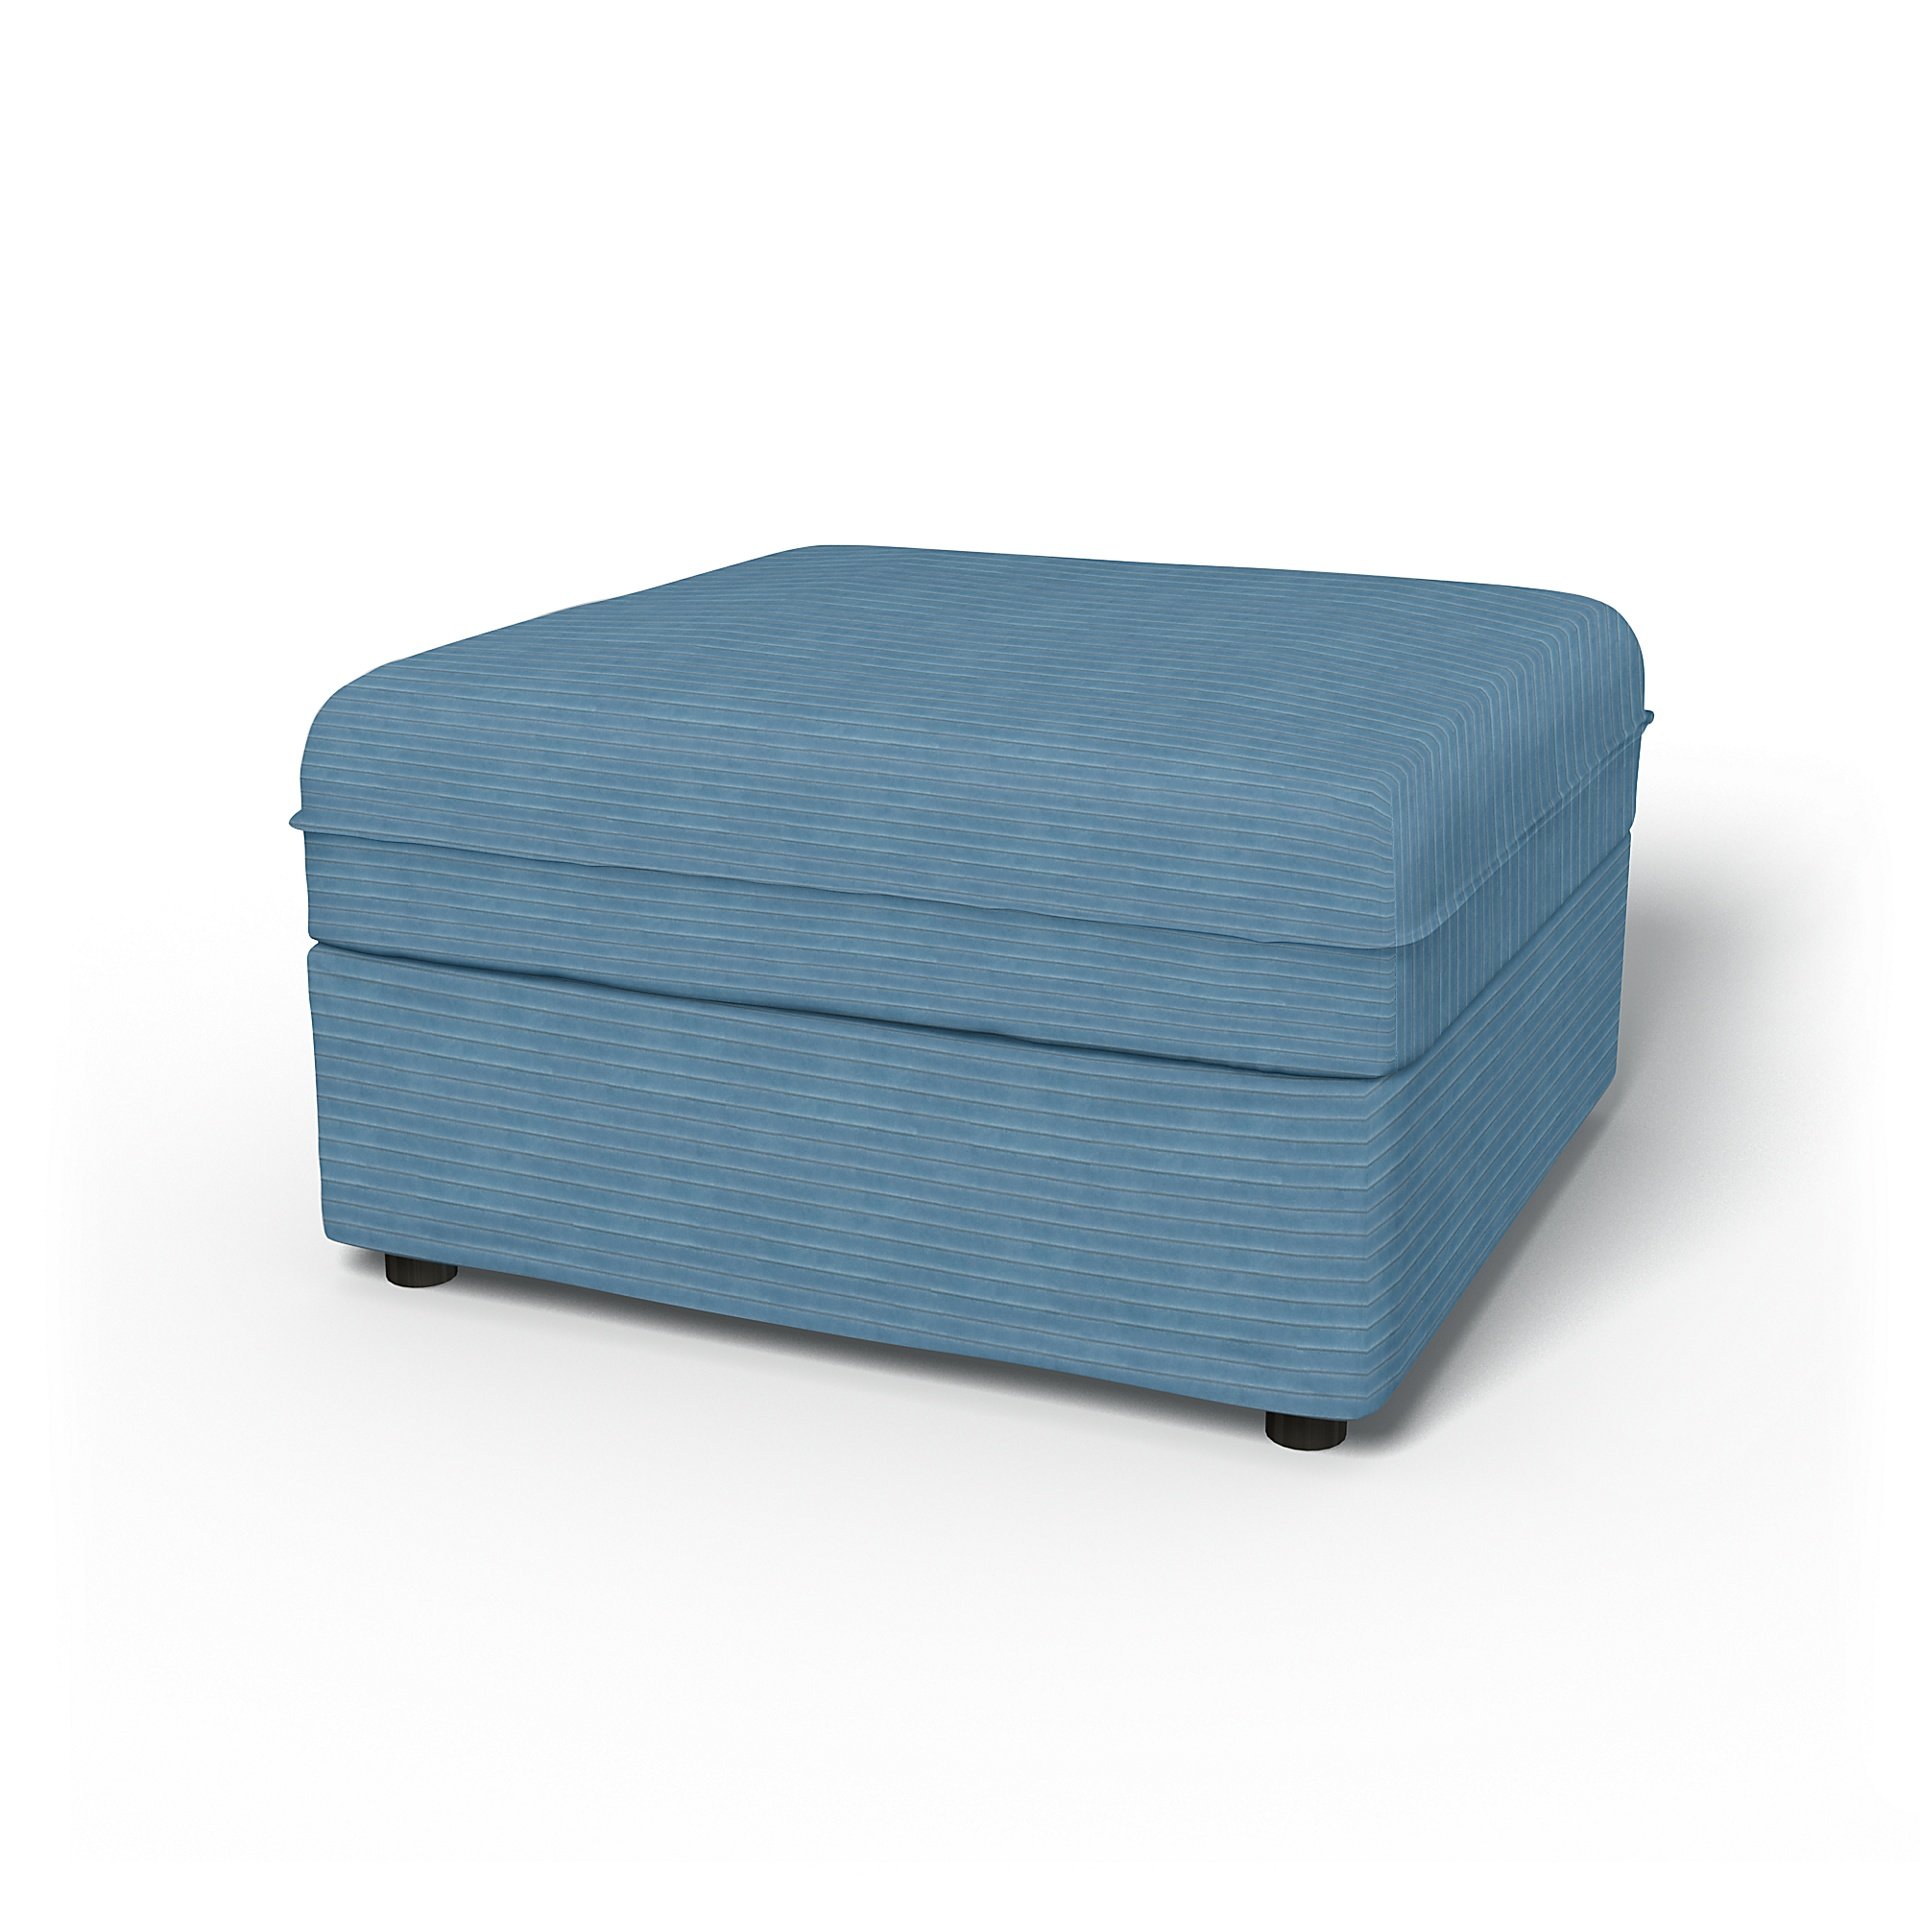 IKEA - Vallentuna Seat Module with Storage Cover 80x80cm 32x32in, Sky Blue, Corduroy - Bemz